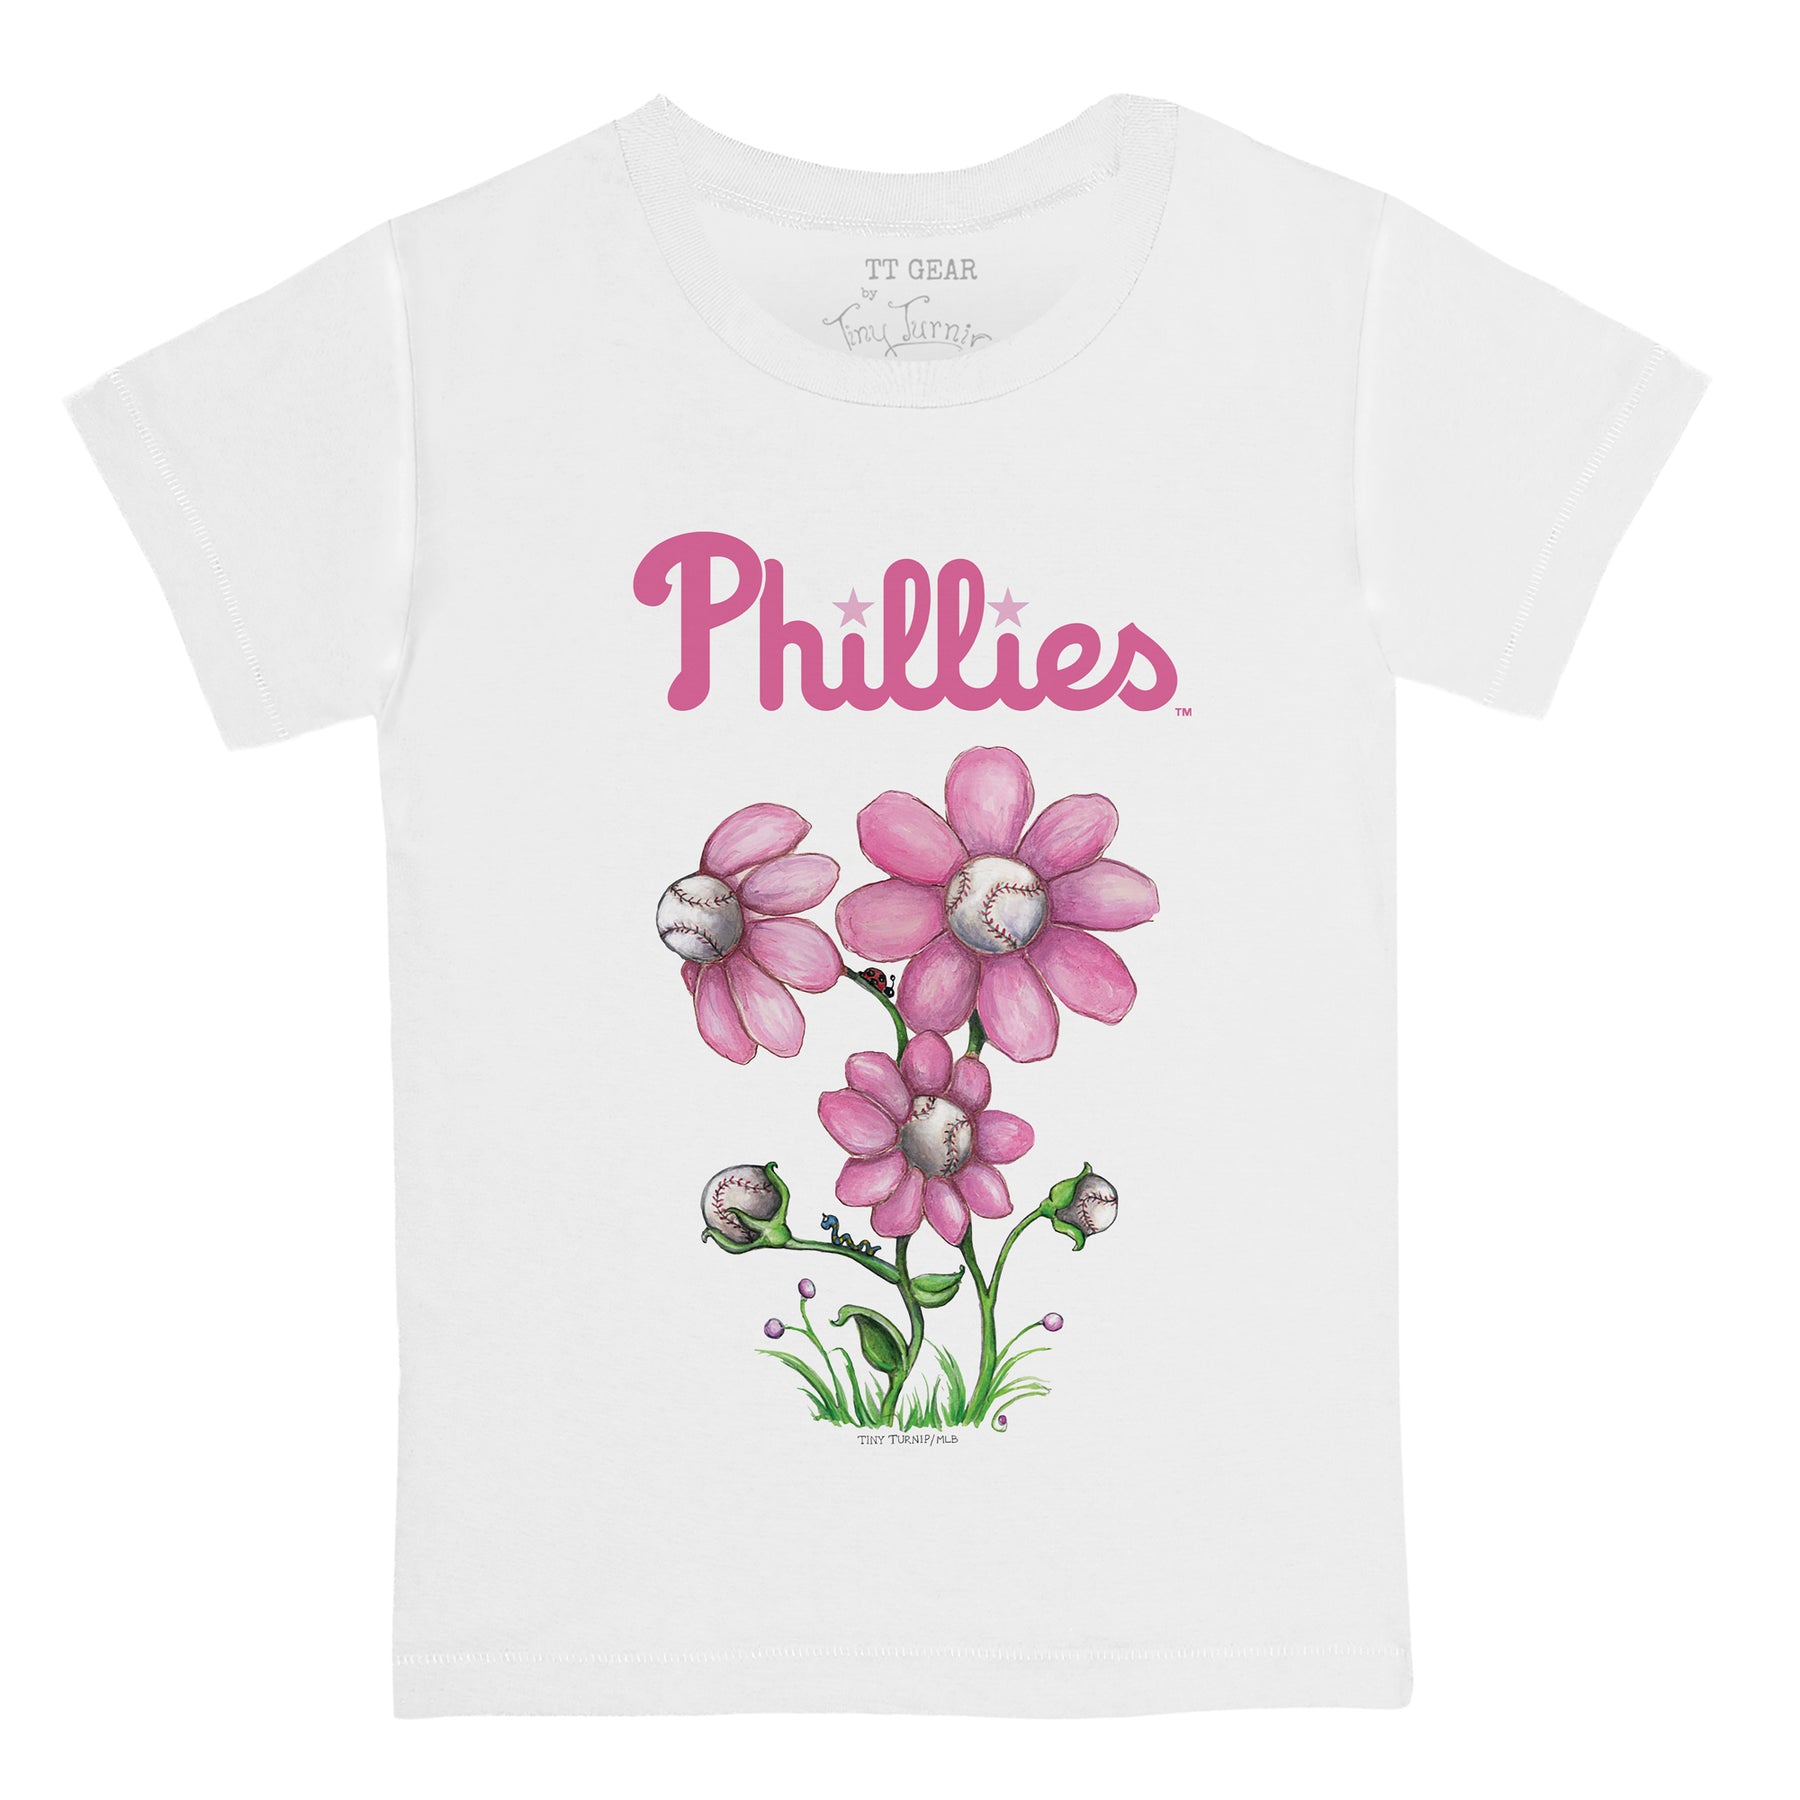 Youth Tiny Turnip Red Philadelphia Phillies Baseball Love T-Shirt Size: Extra Large